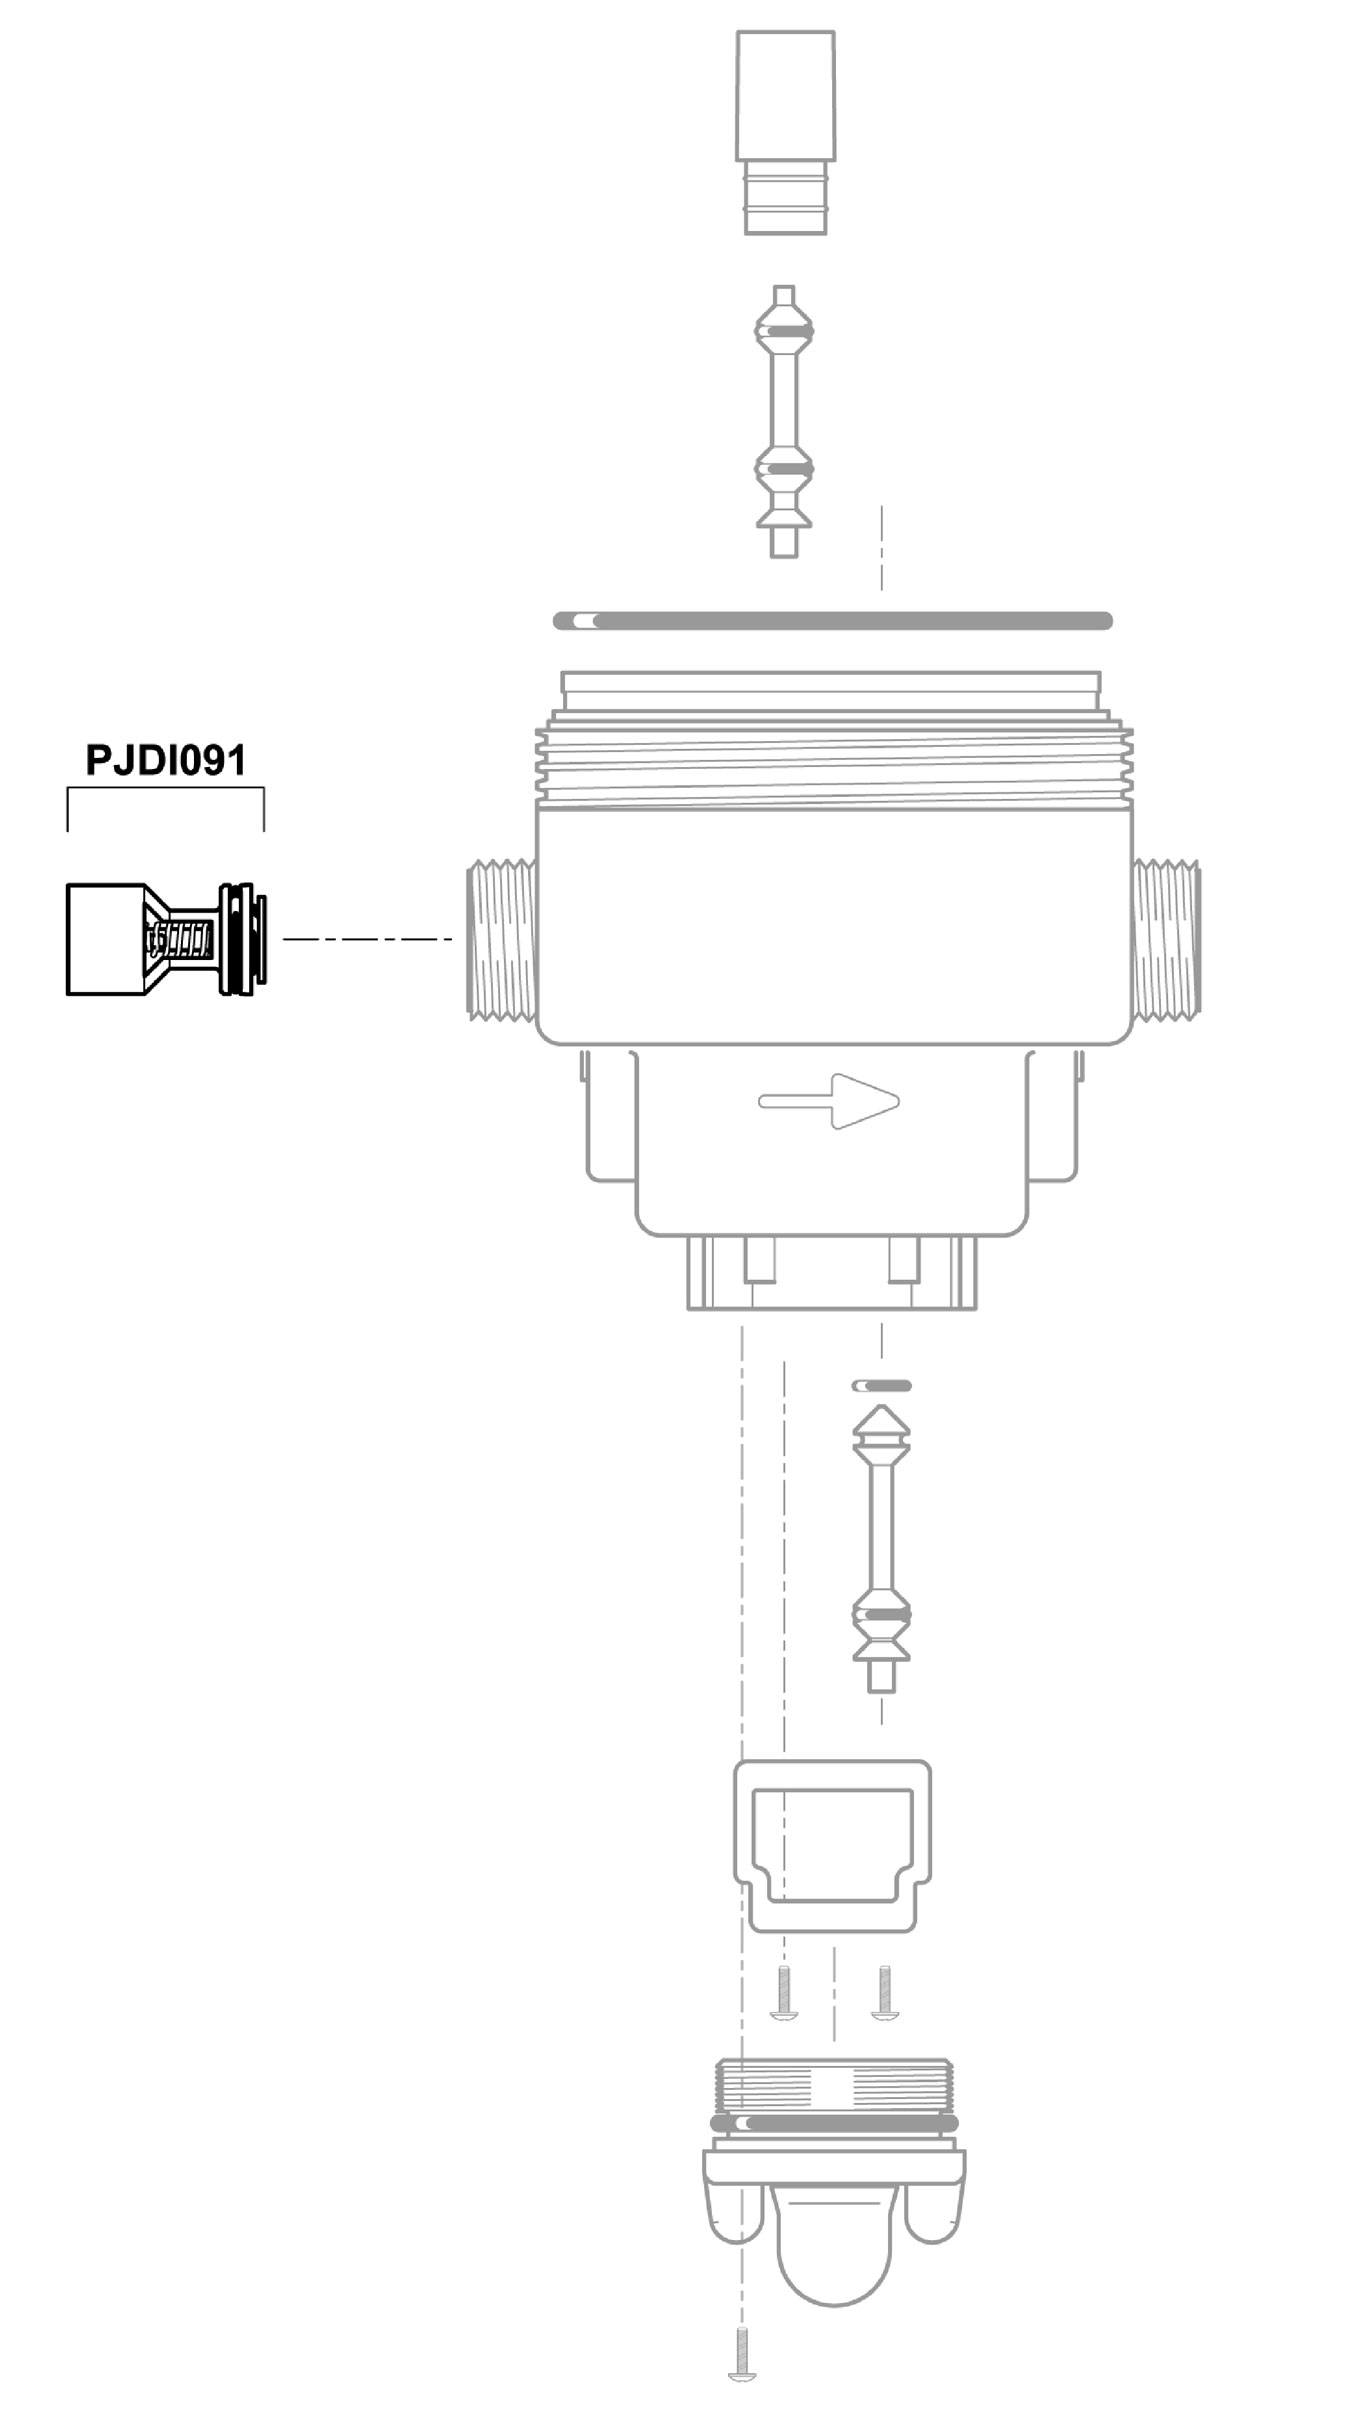 PJDI09HT - part kit safety valve D07 series